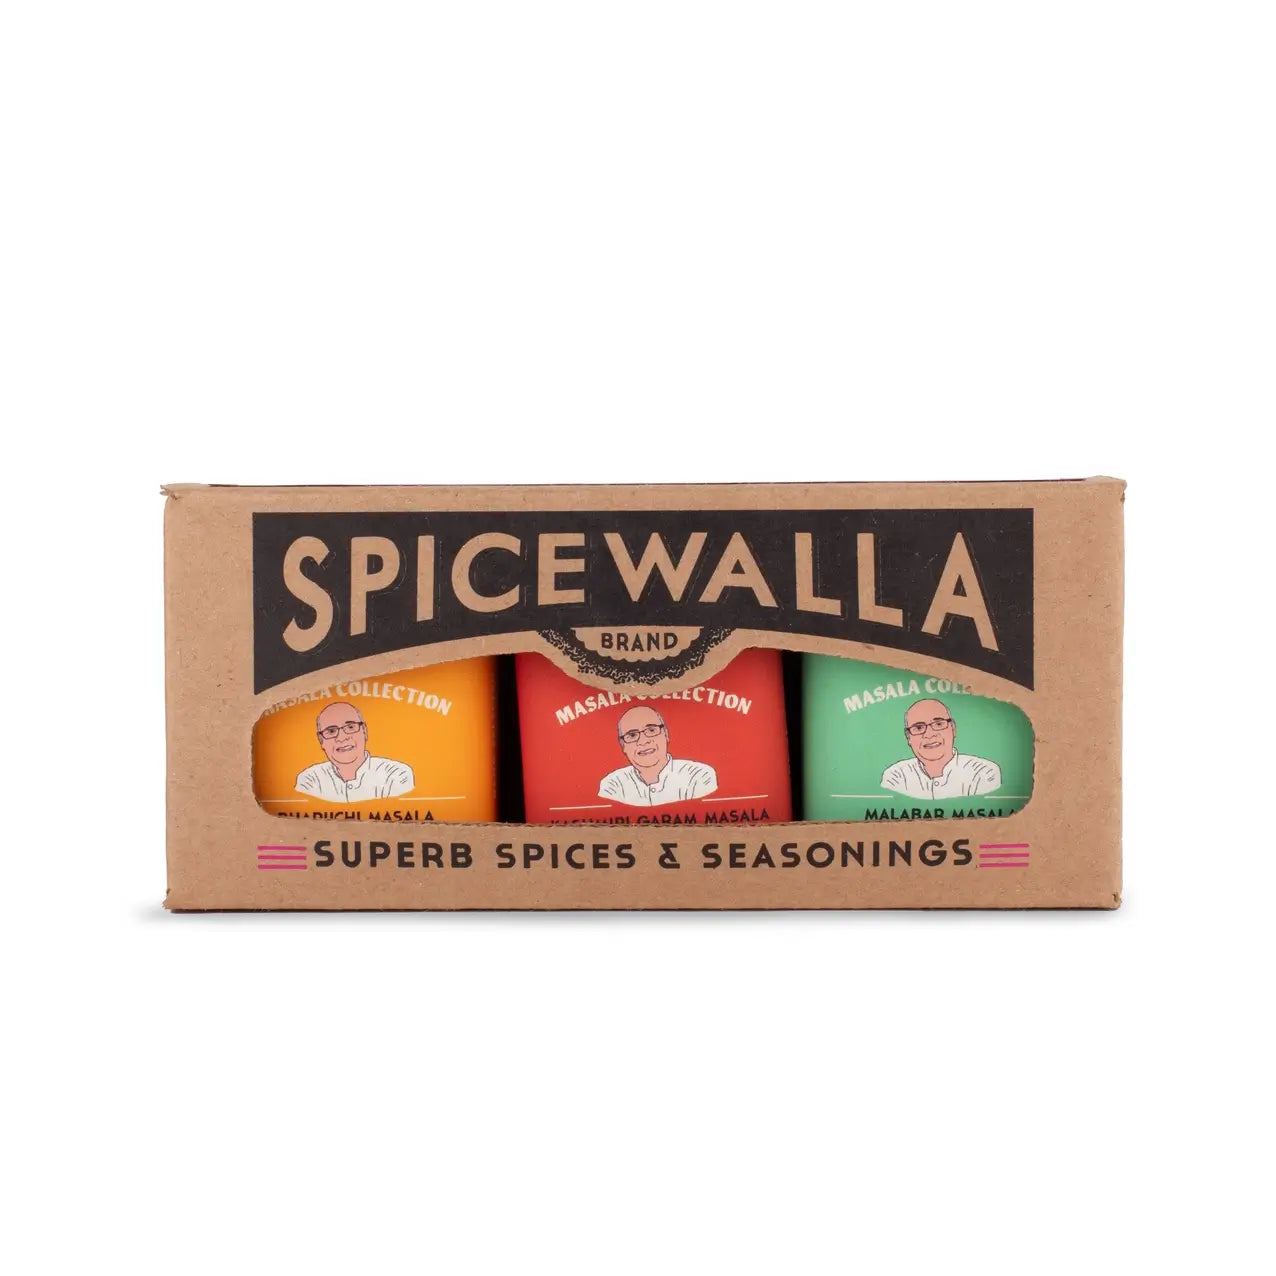 The Vish'S Masala Collection from Spicewalla contains 3 spices: Bharuch Masala,Kashmiri Garam Masala, and Malabar Masala in small tins.  